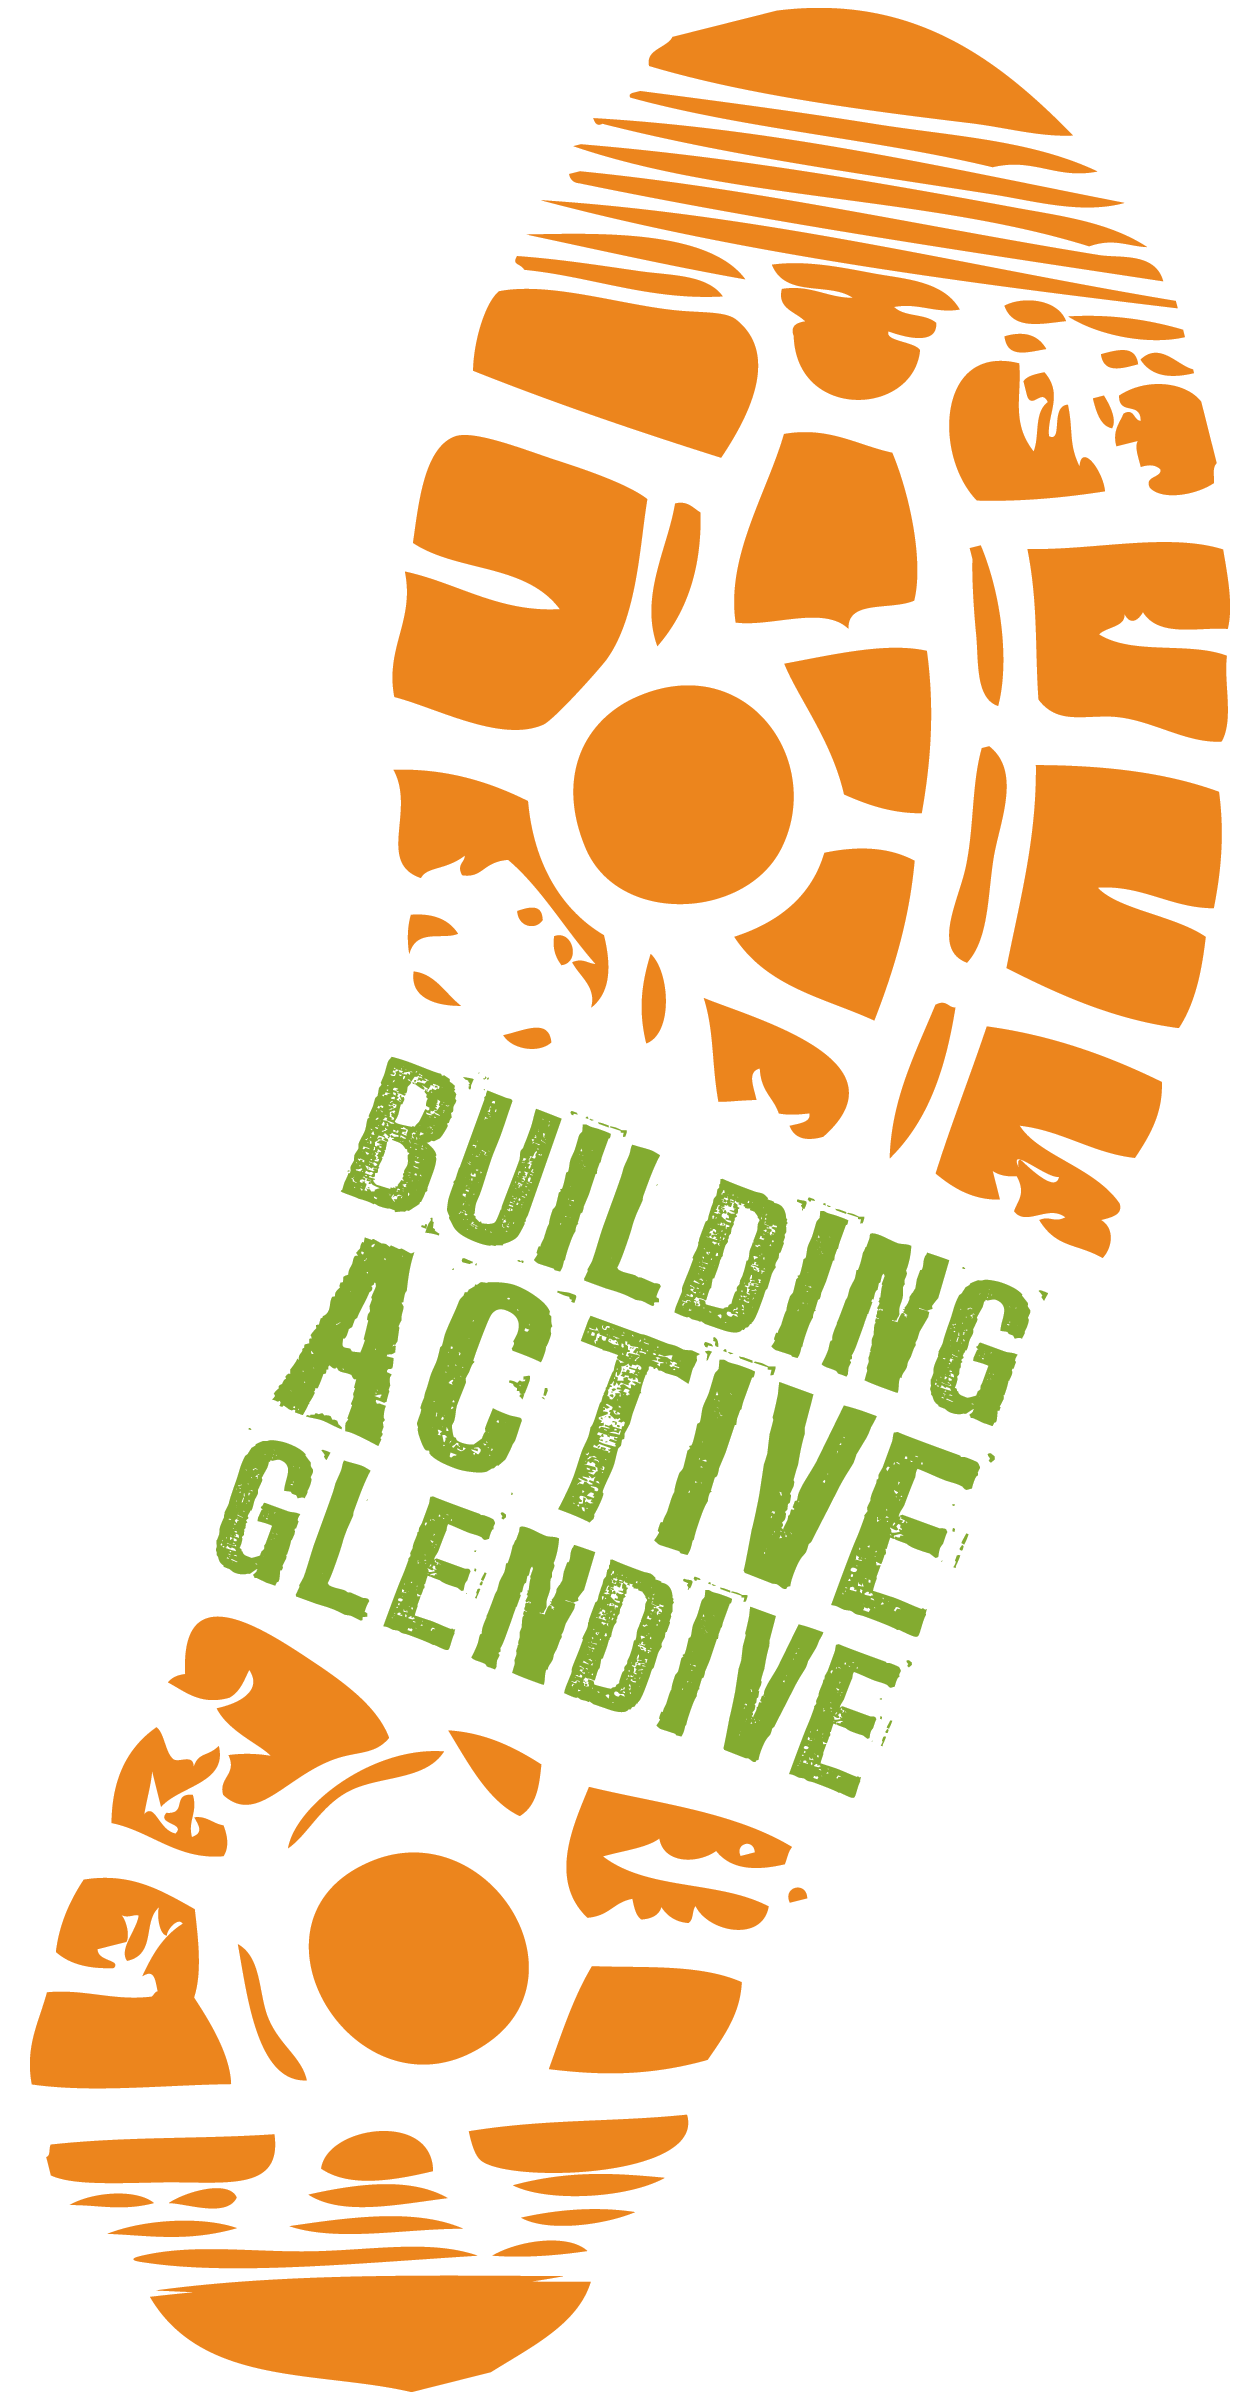 Building Active Glendive